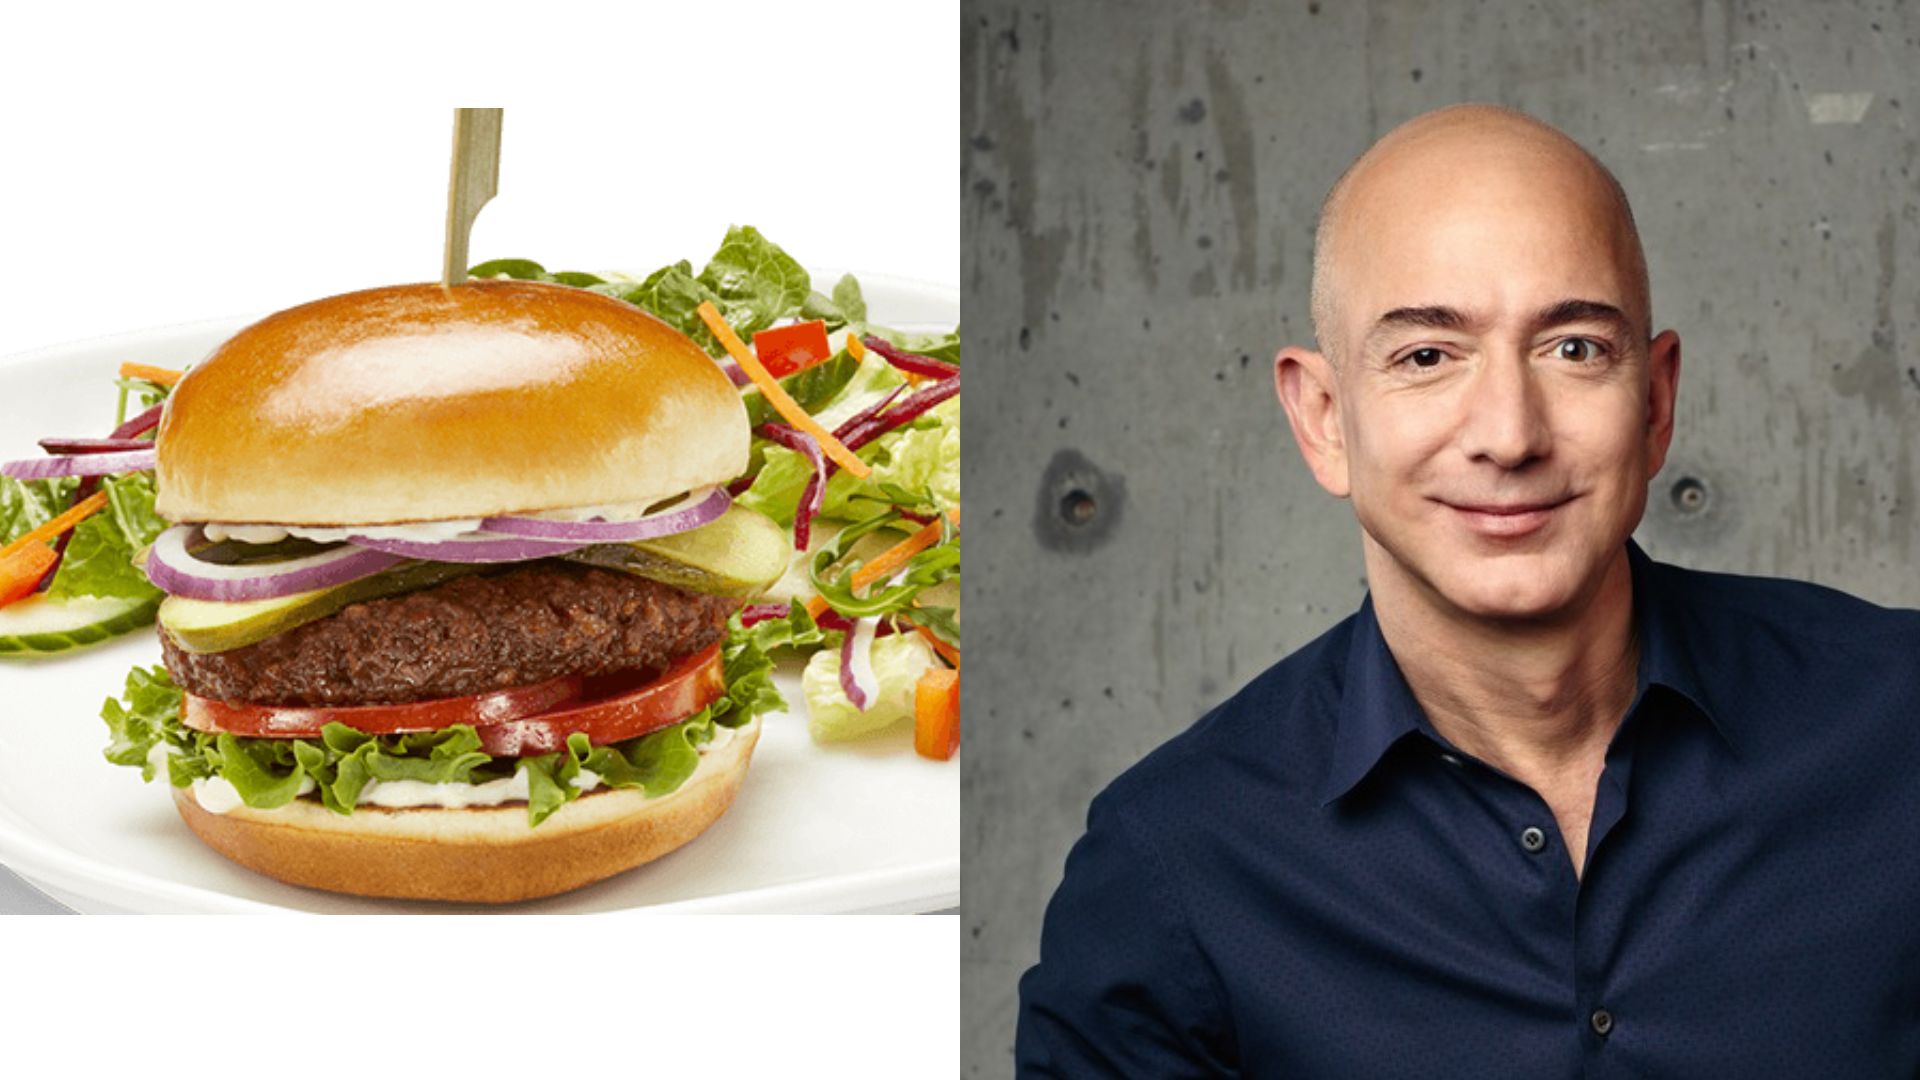 O Jeff Bezos επενδύει 60 εκατομμύρια δολάρια από το Bezos Earth Fund σε φυτικές μορφές κρέατος